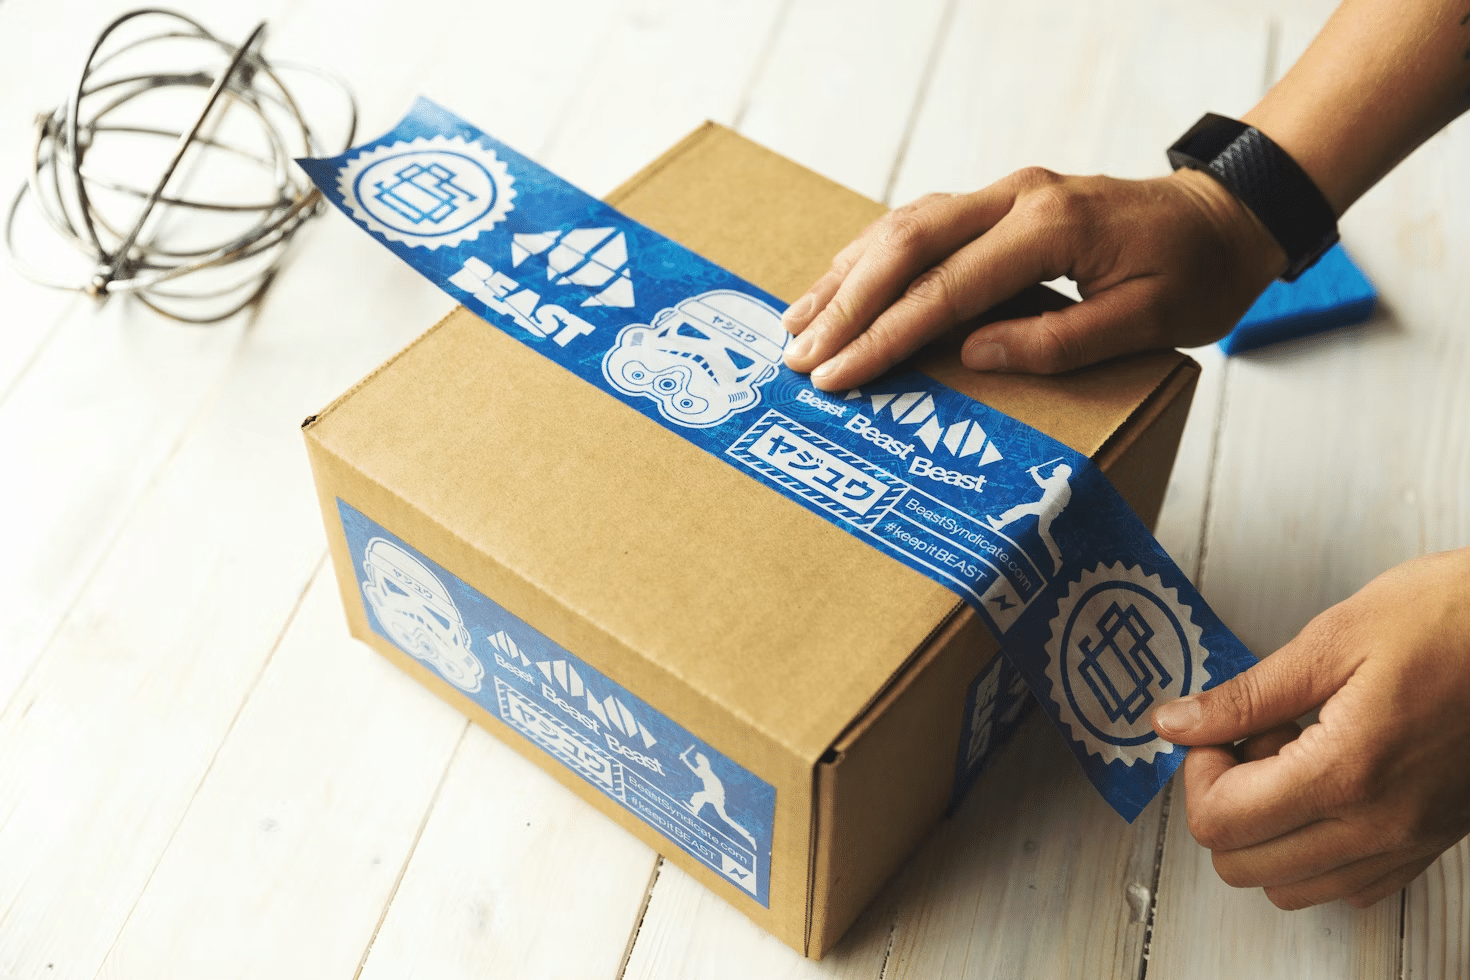 Mengemas produk menggunakan box karton dan stiker brand